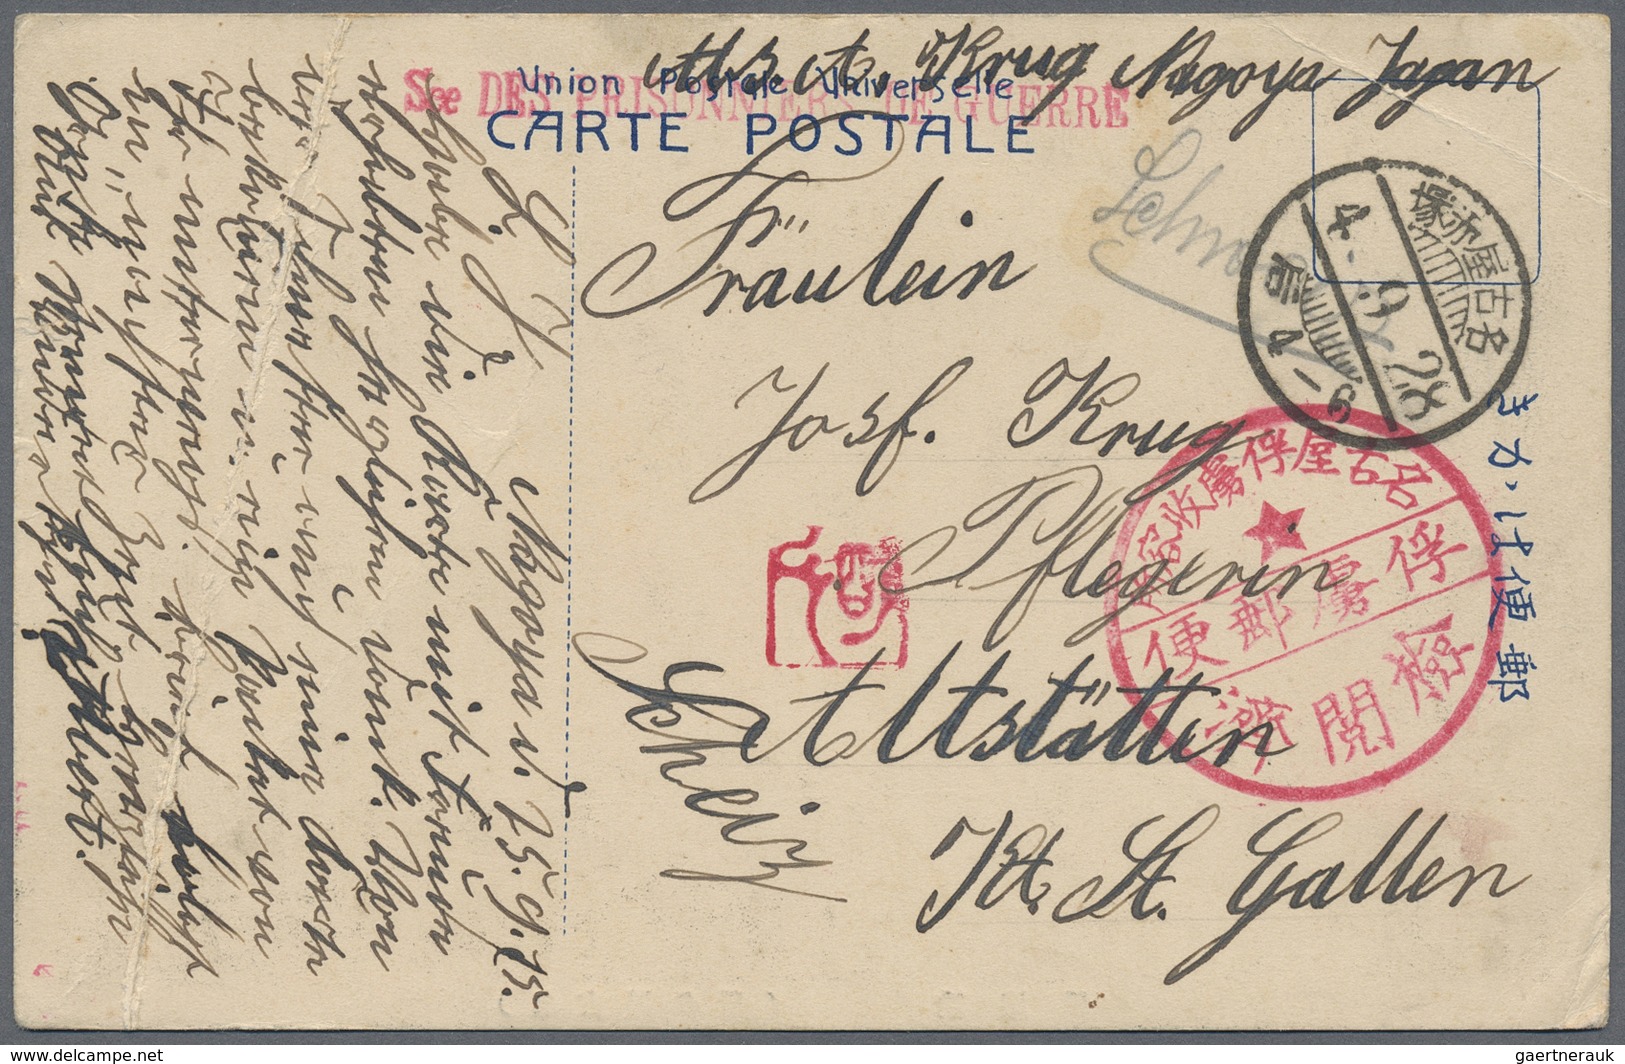 Br/ Lagerpost Tsingtau: Nagoya, 1915/18, ppc (20) used: inbound intercamp cards from Matsuyama (2), Band